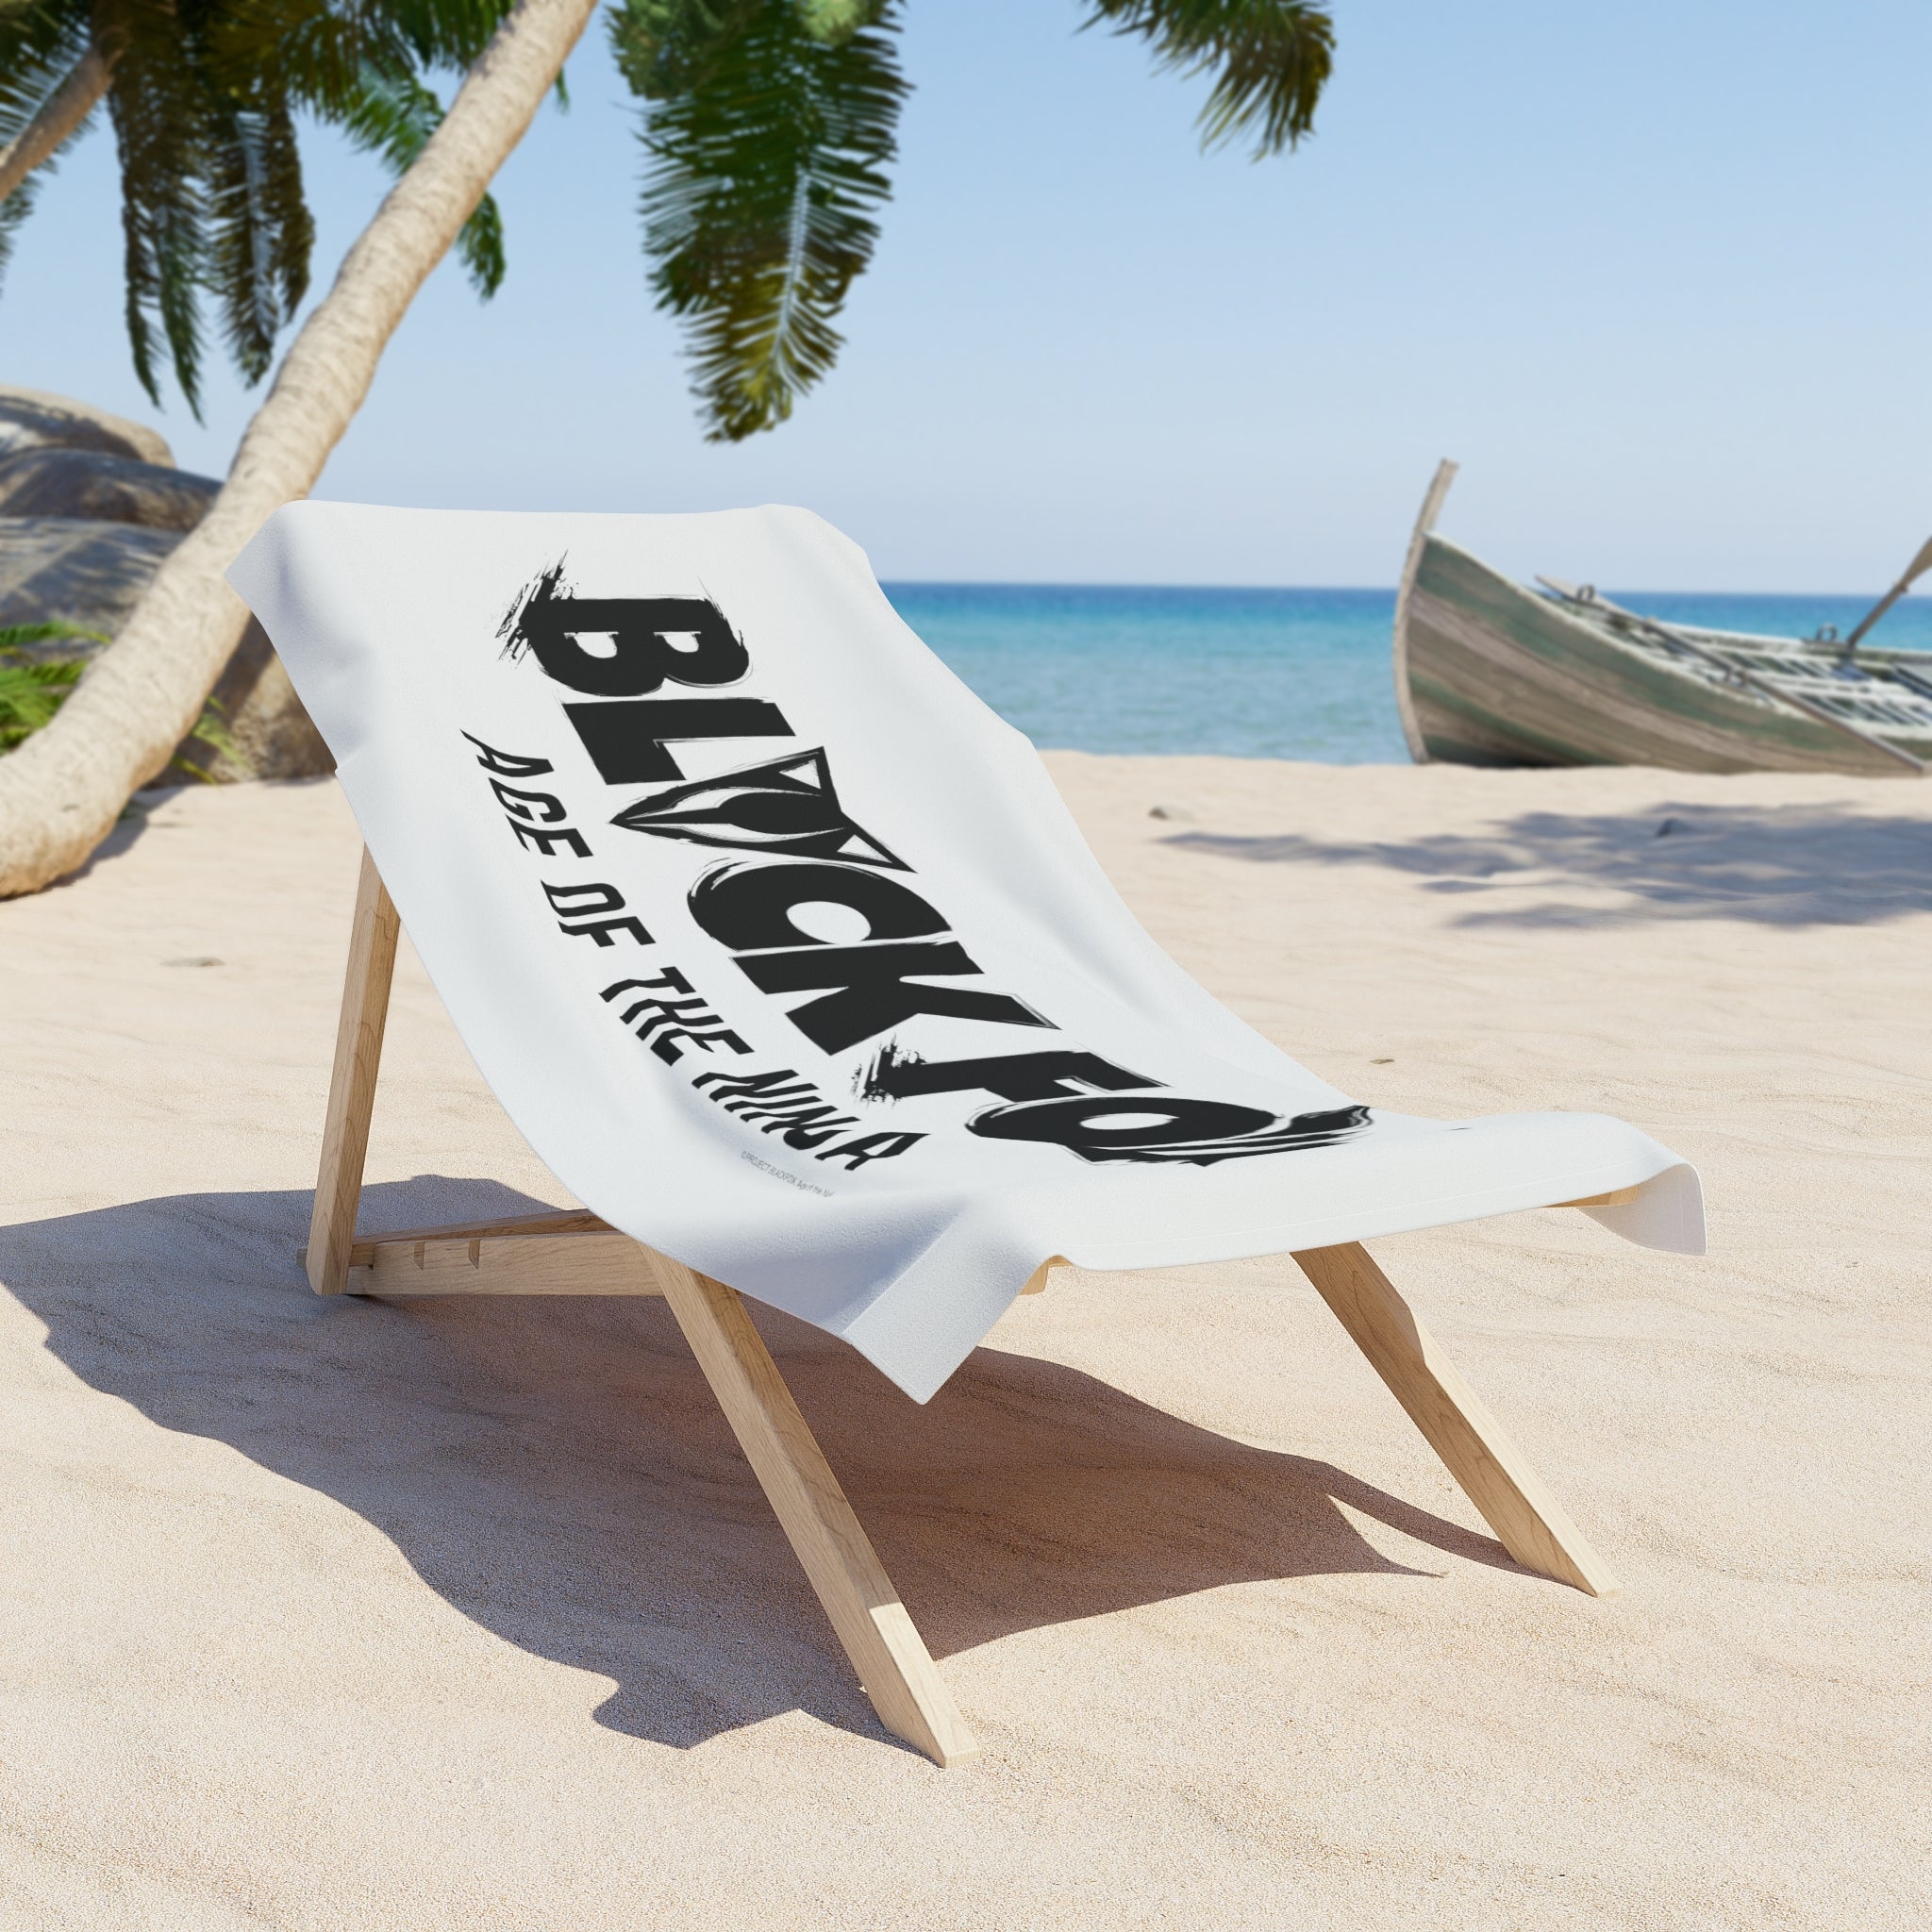 BLACKFOX LOGO Beach Towel (White)